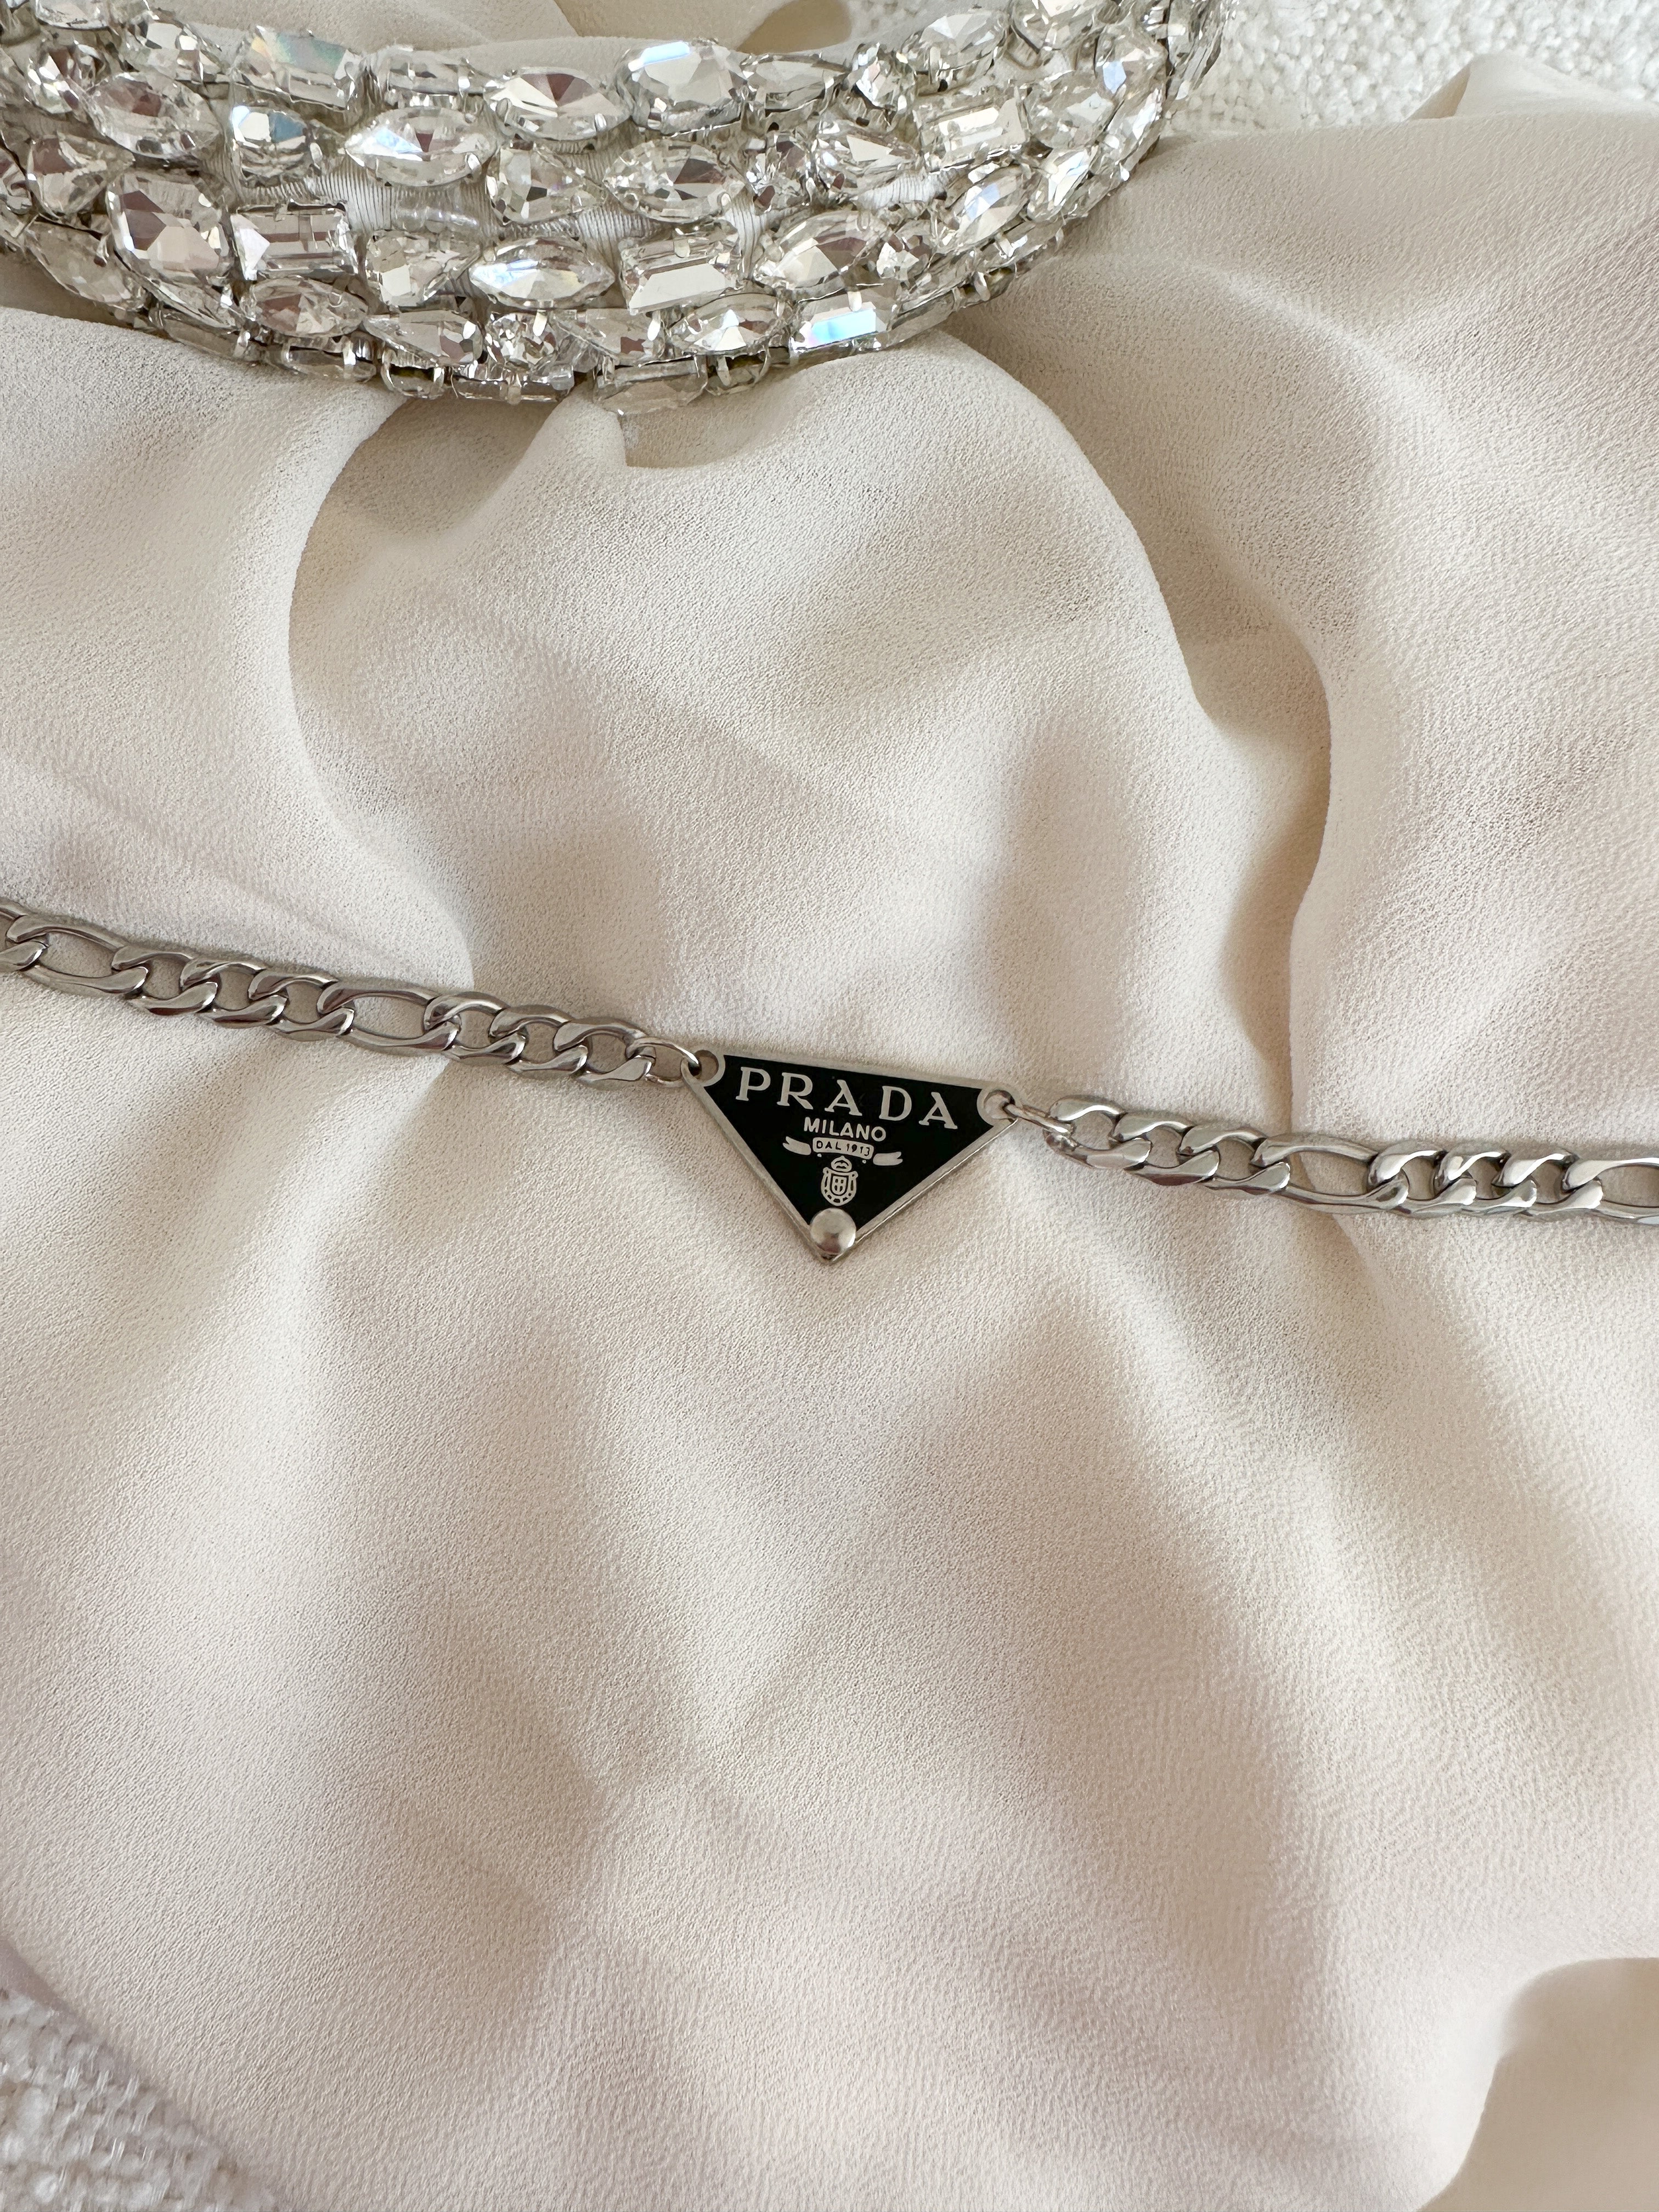 The “Silver Milano” Choker Necklace